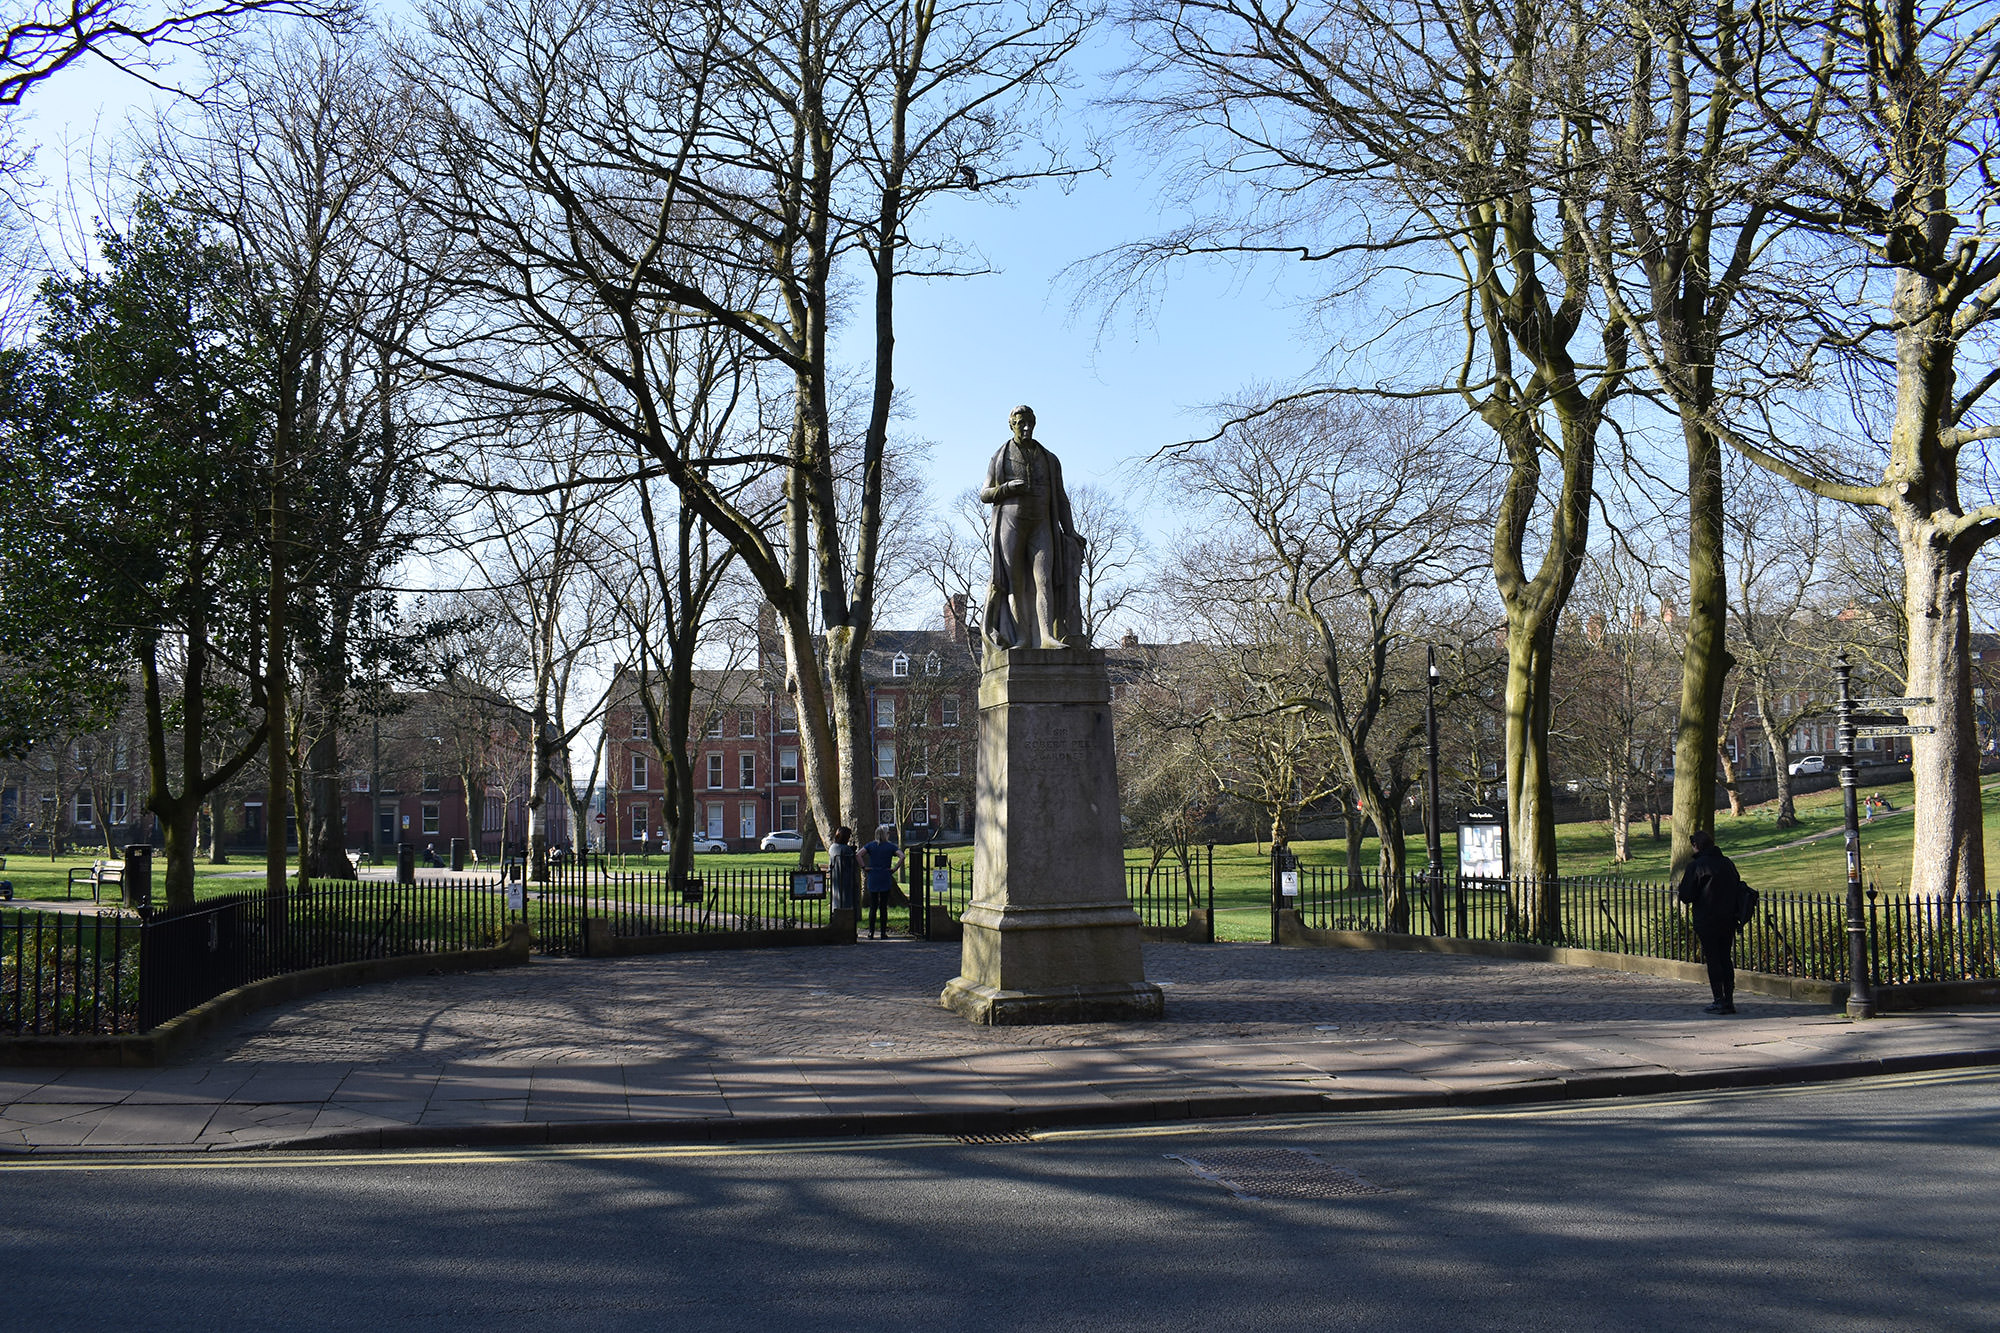 Sir Robert Peel Statue, Winckley Square, Preston